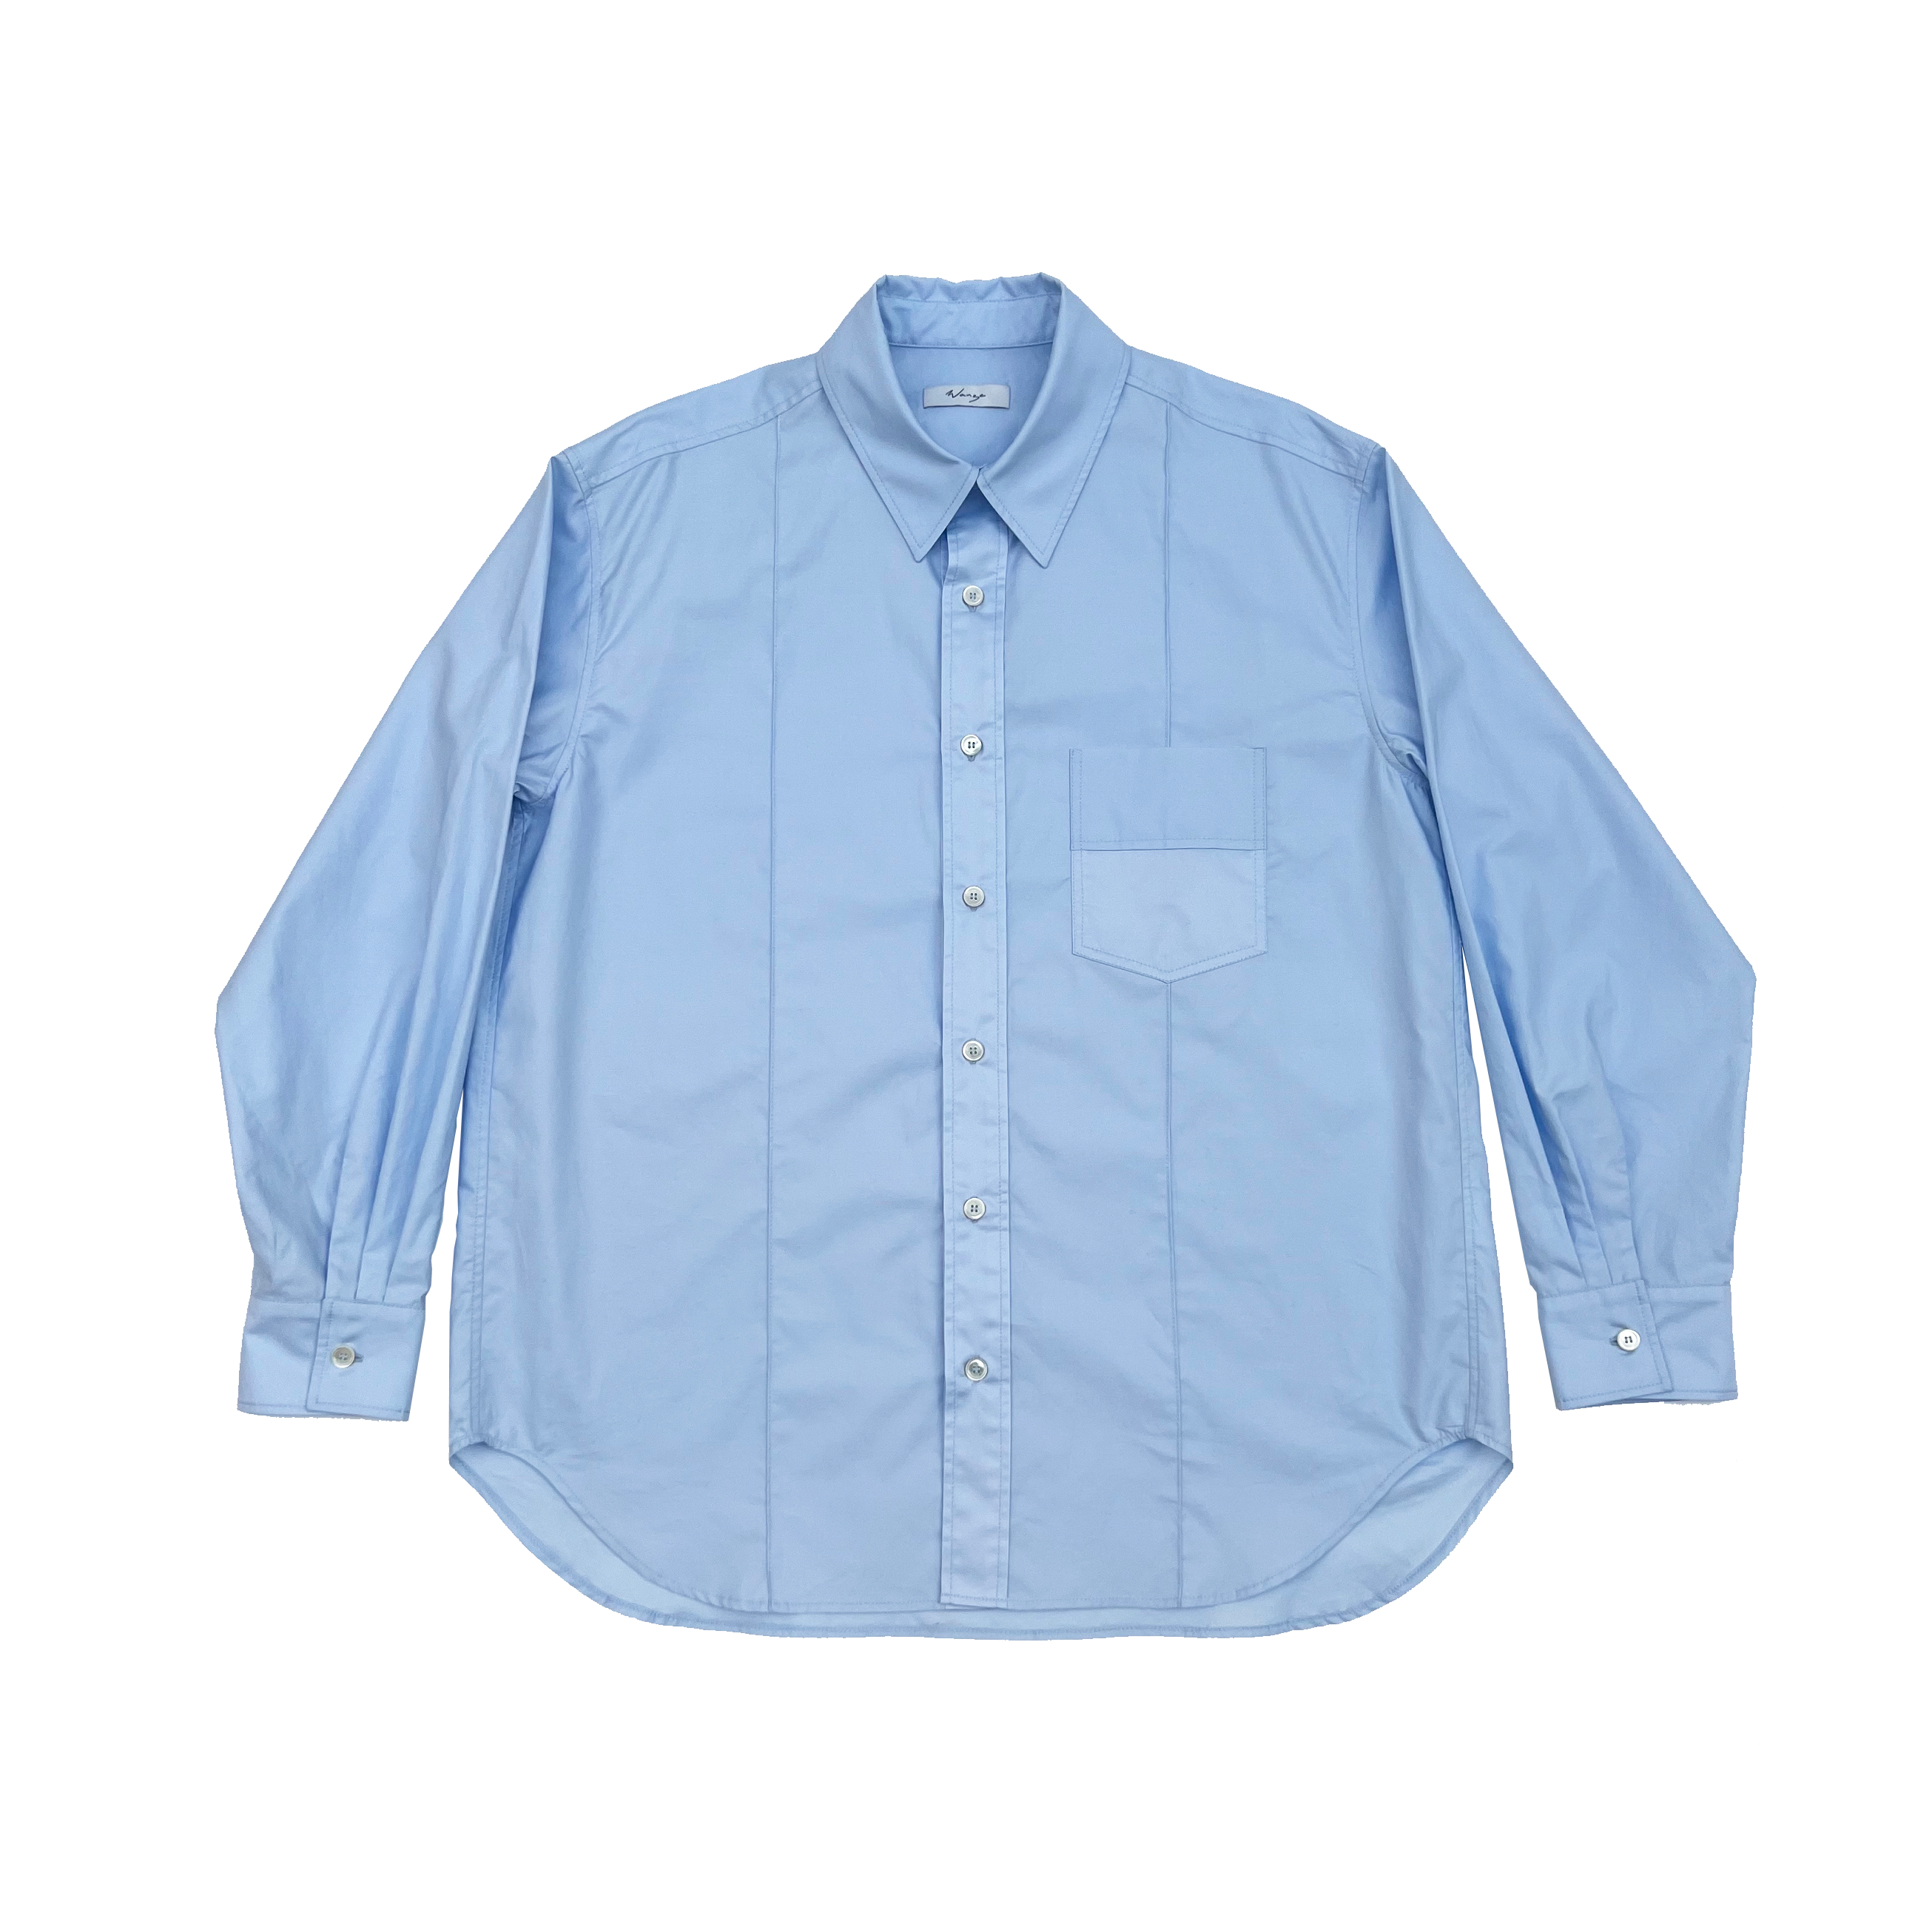 Classic Button Up Shirt Cotton Blue